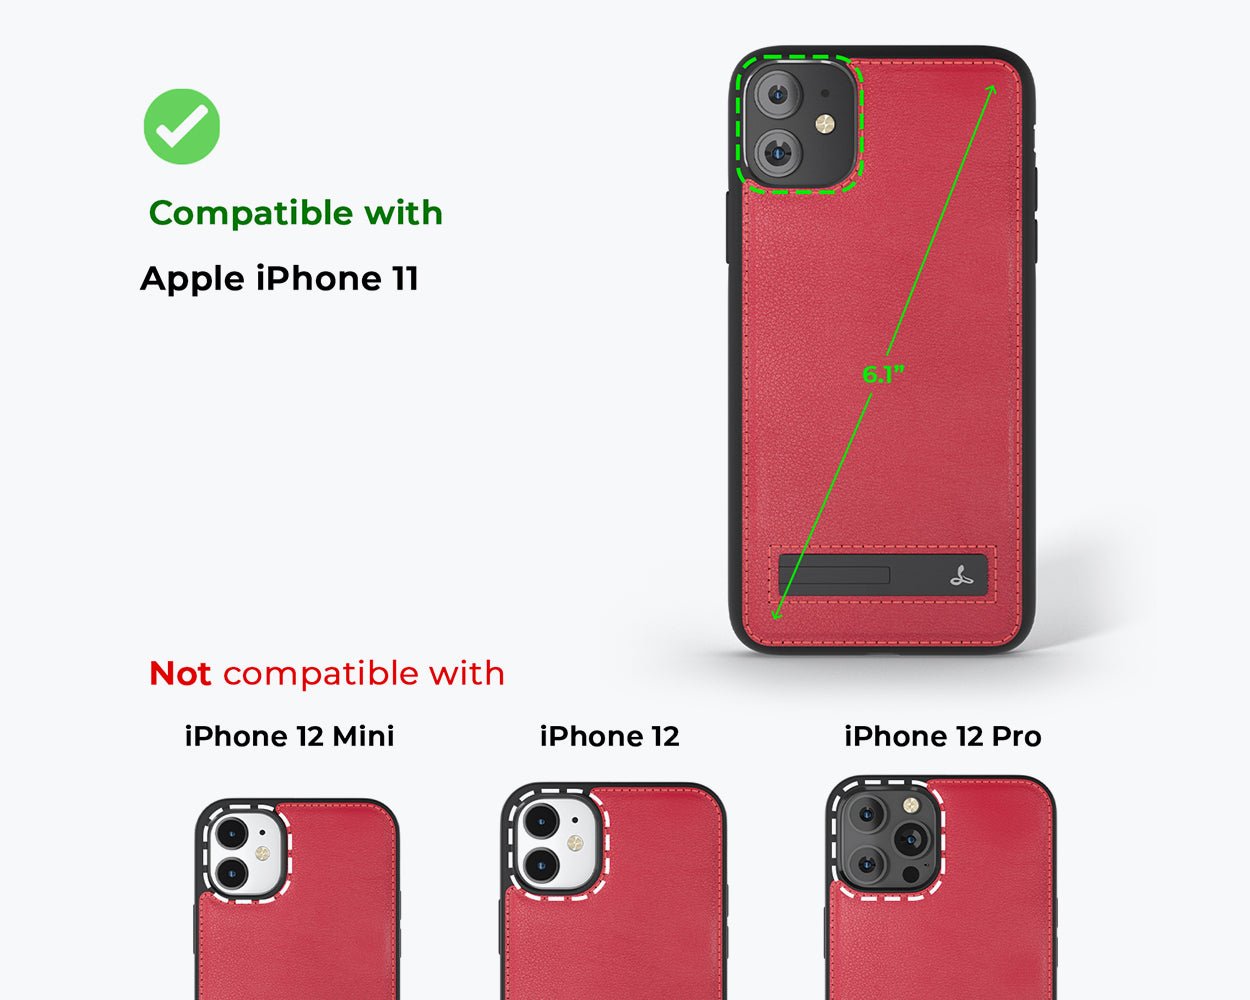 Metro Leather Case - Apple iPhone 11 / iPhone XR Pebble Grey Apple iPhone 11 - Snakehive UK